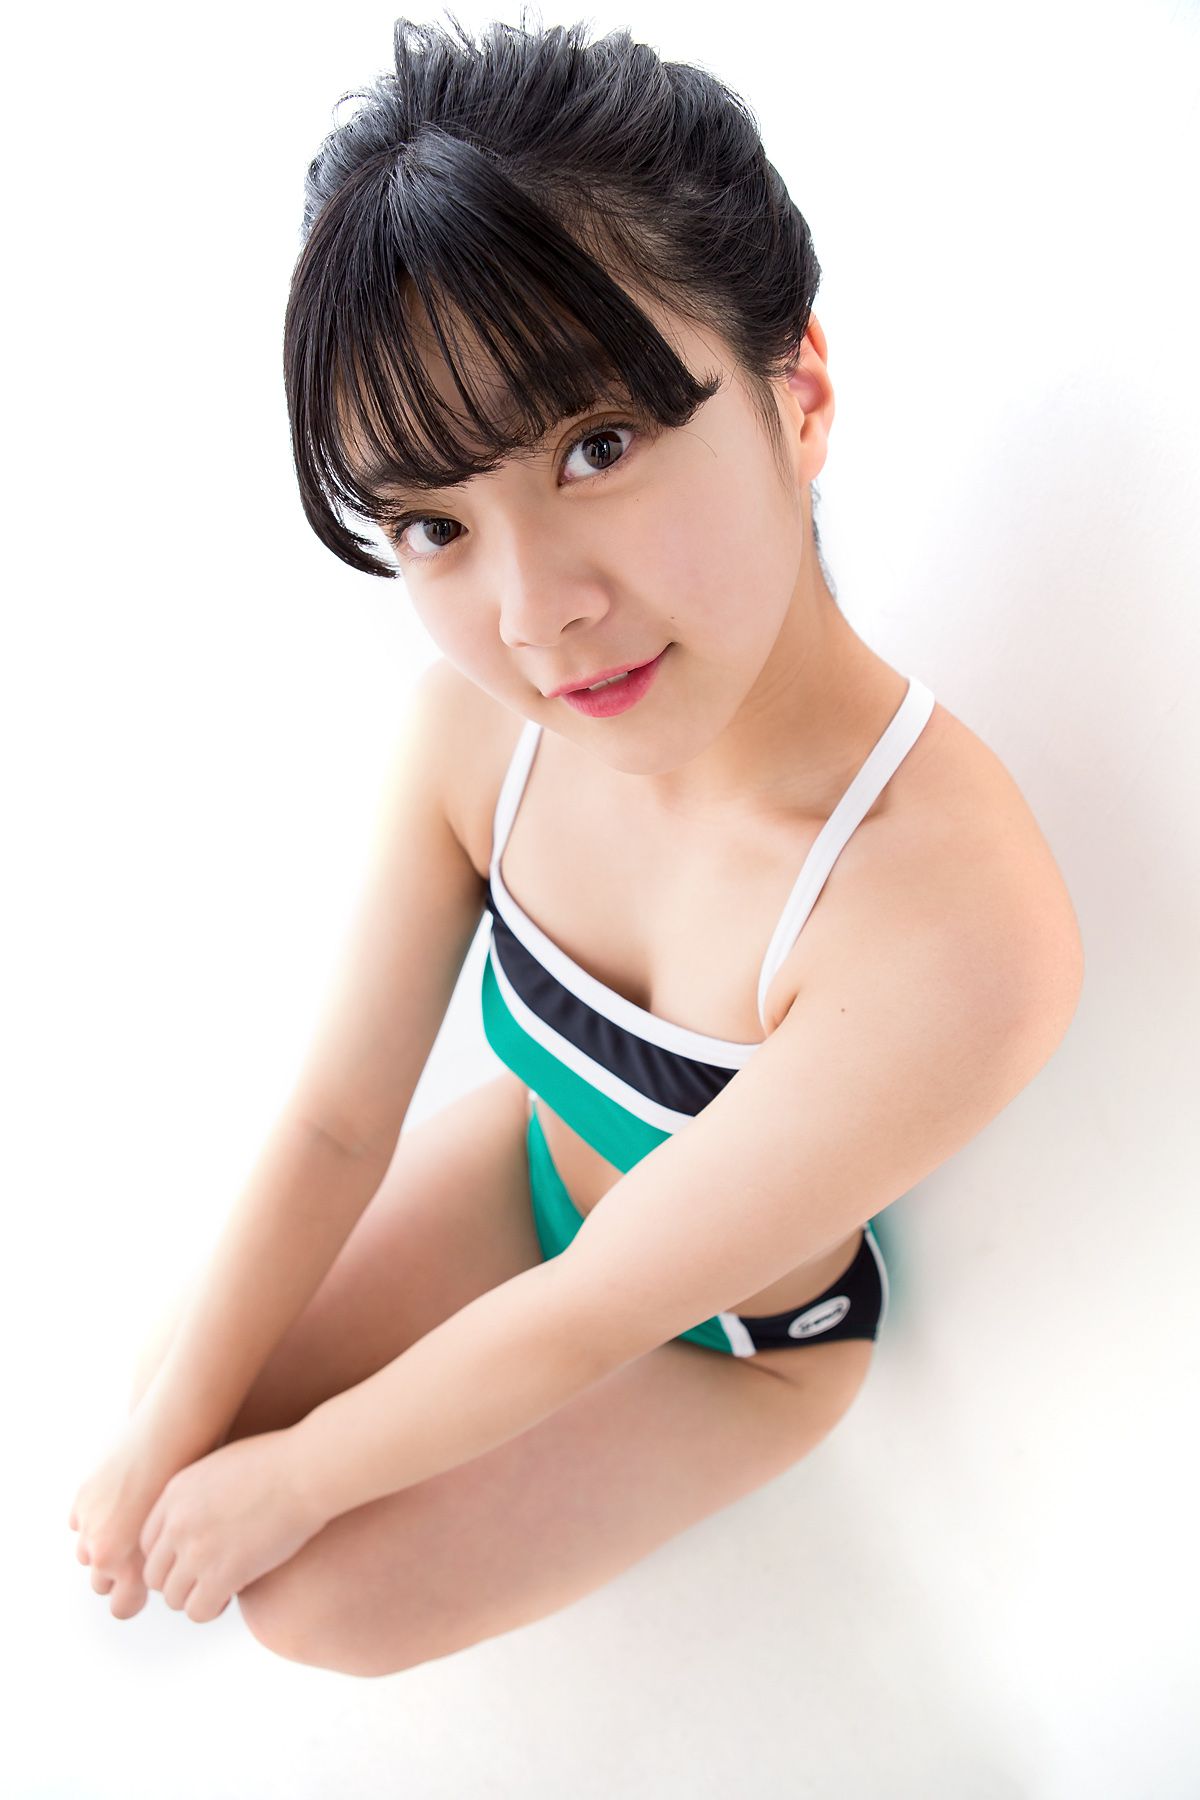 [Minisuka.tv] Saria Natsume 夏目咲莉愛 - Premium Gallery 03